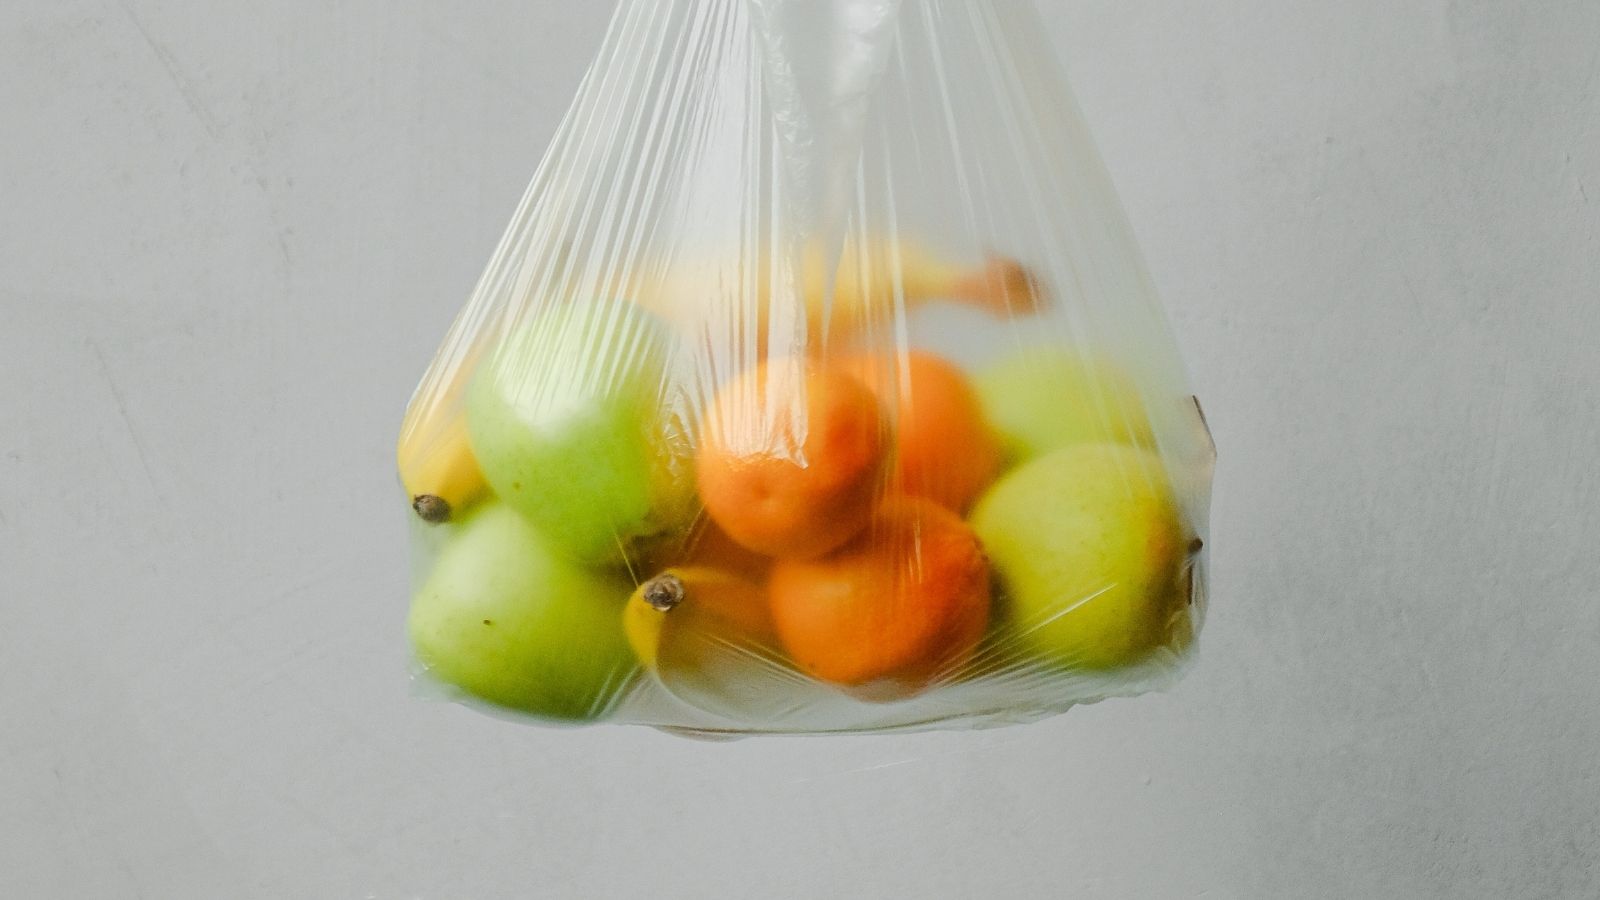 Fruit in a plastic bag. Photo credit: Anna Shvets, public domain